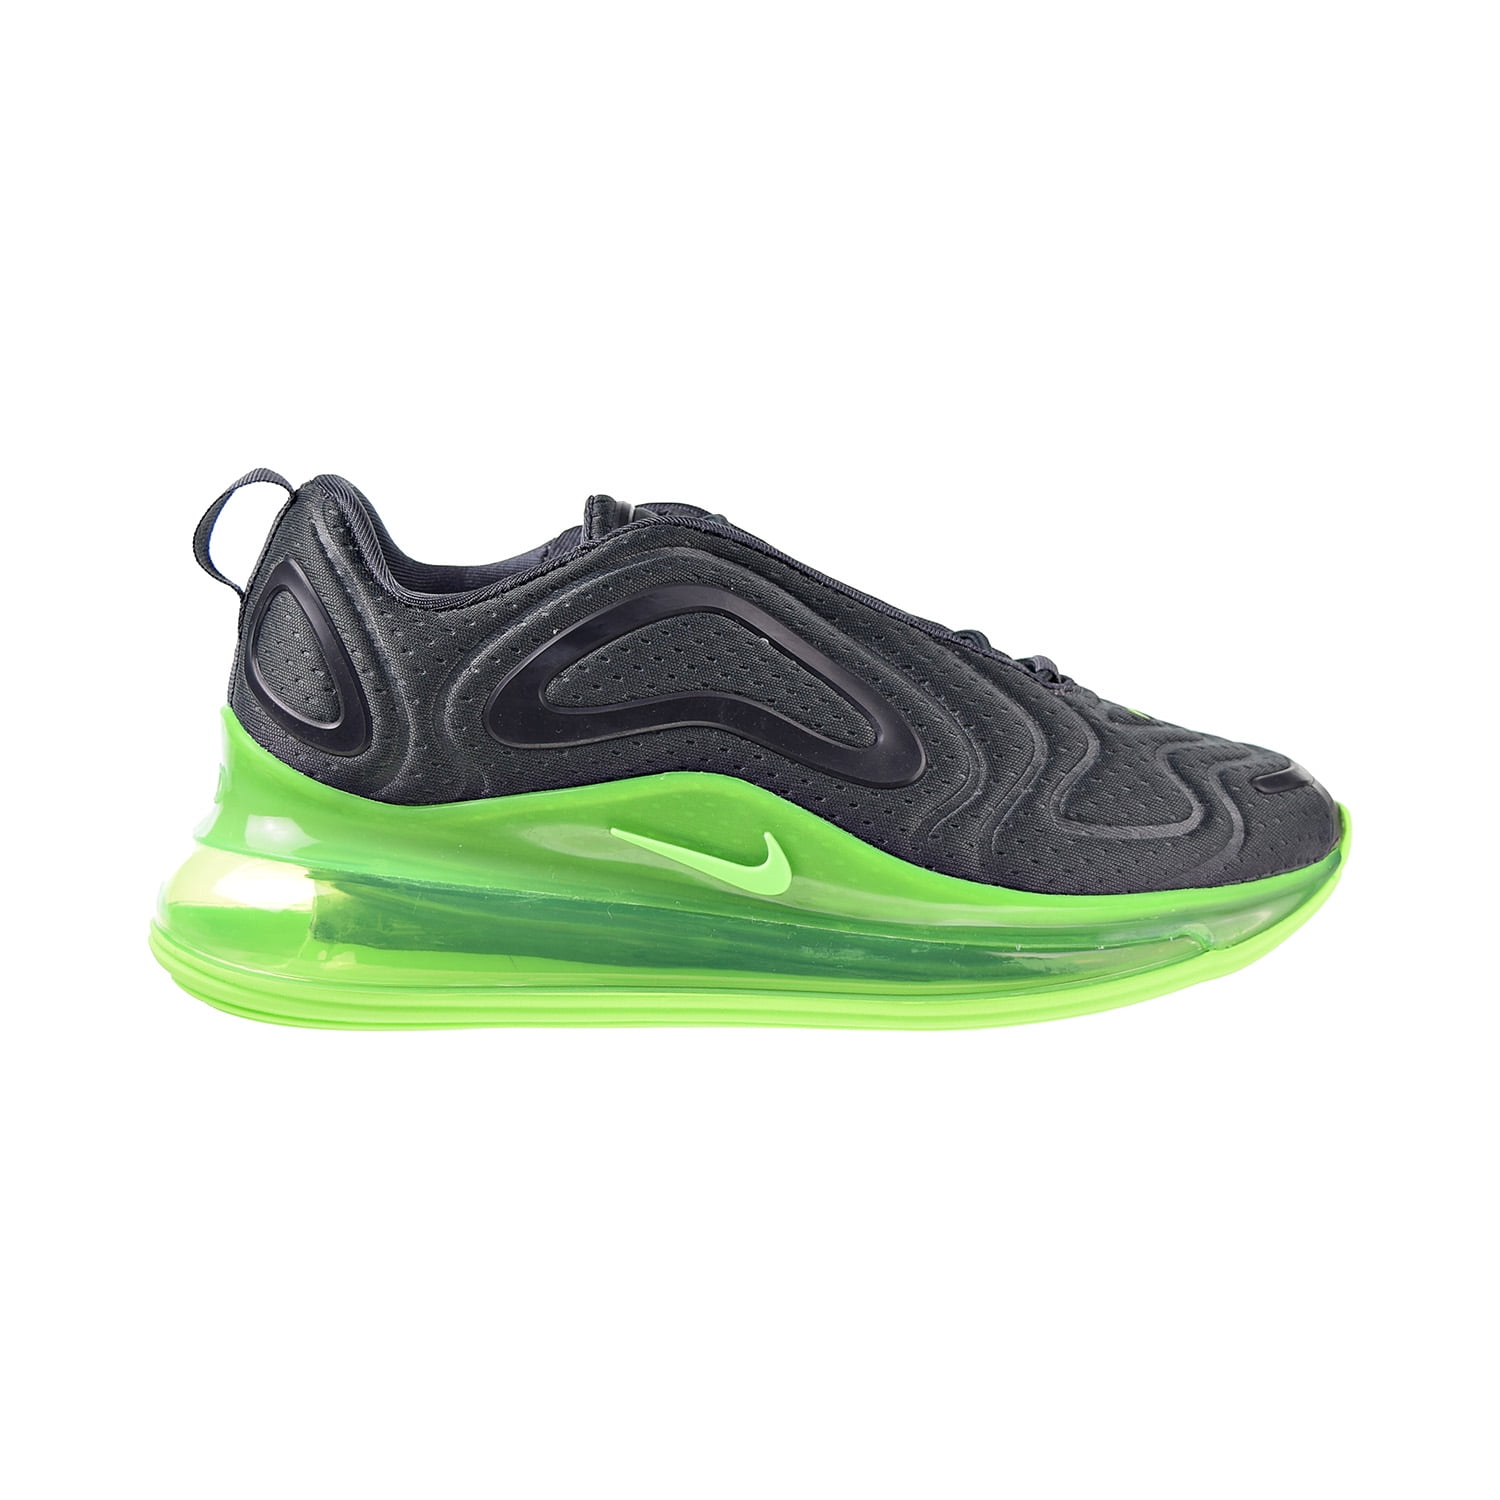 Chemicaliën Bedreven pop Nike Air Max 720 Men's Shoes Anthracite-Electric Green ao2924-018 -  Walmart.com